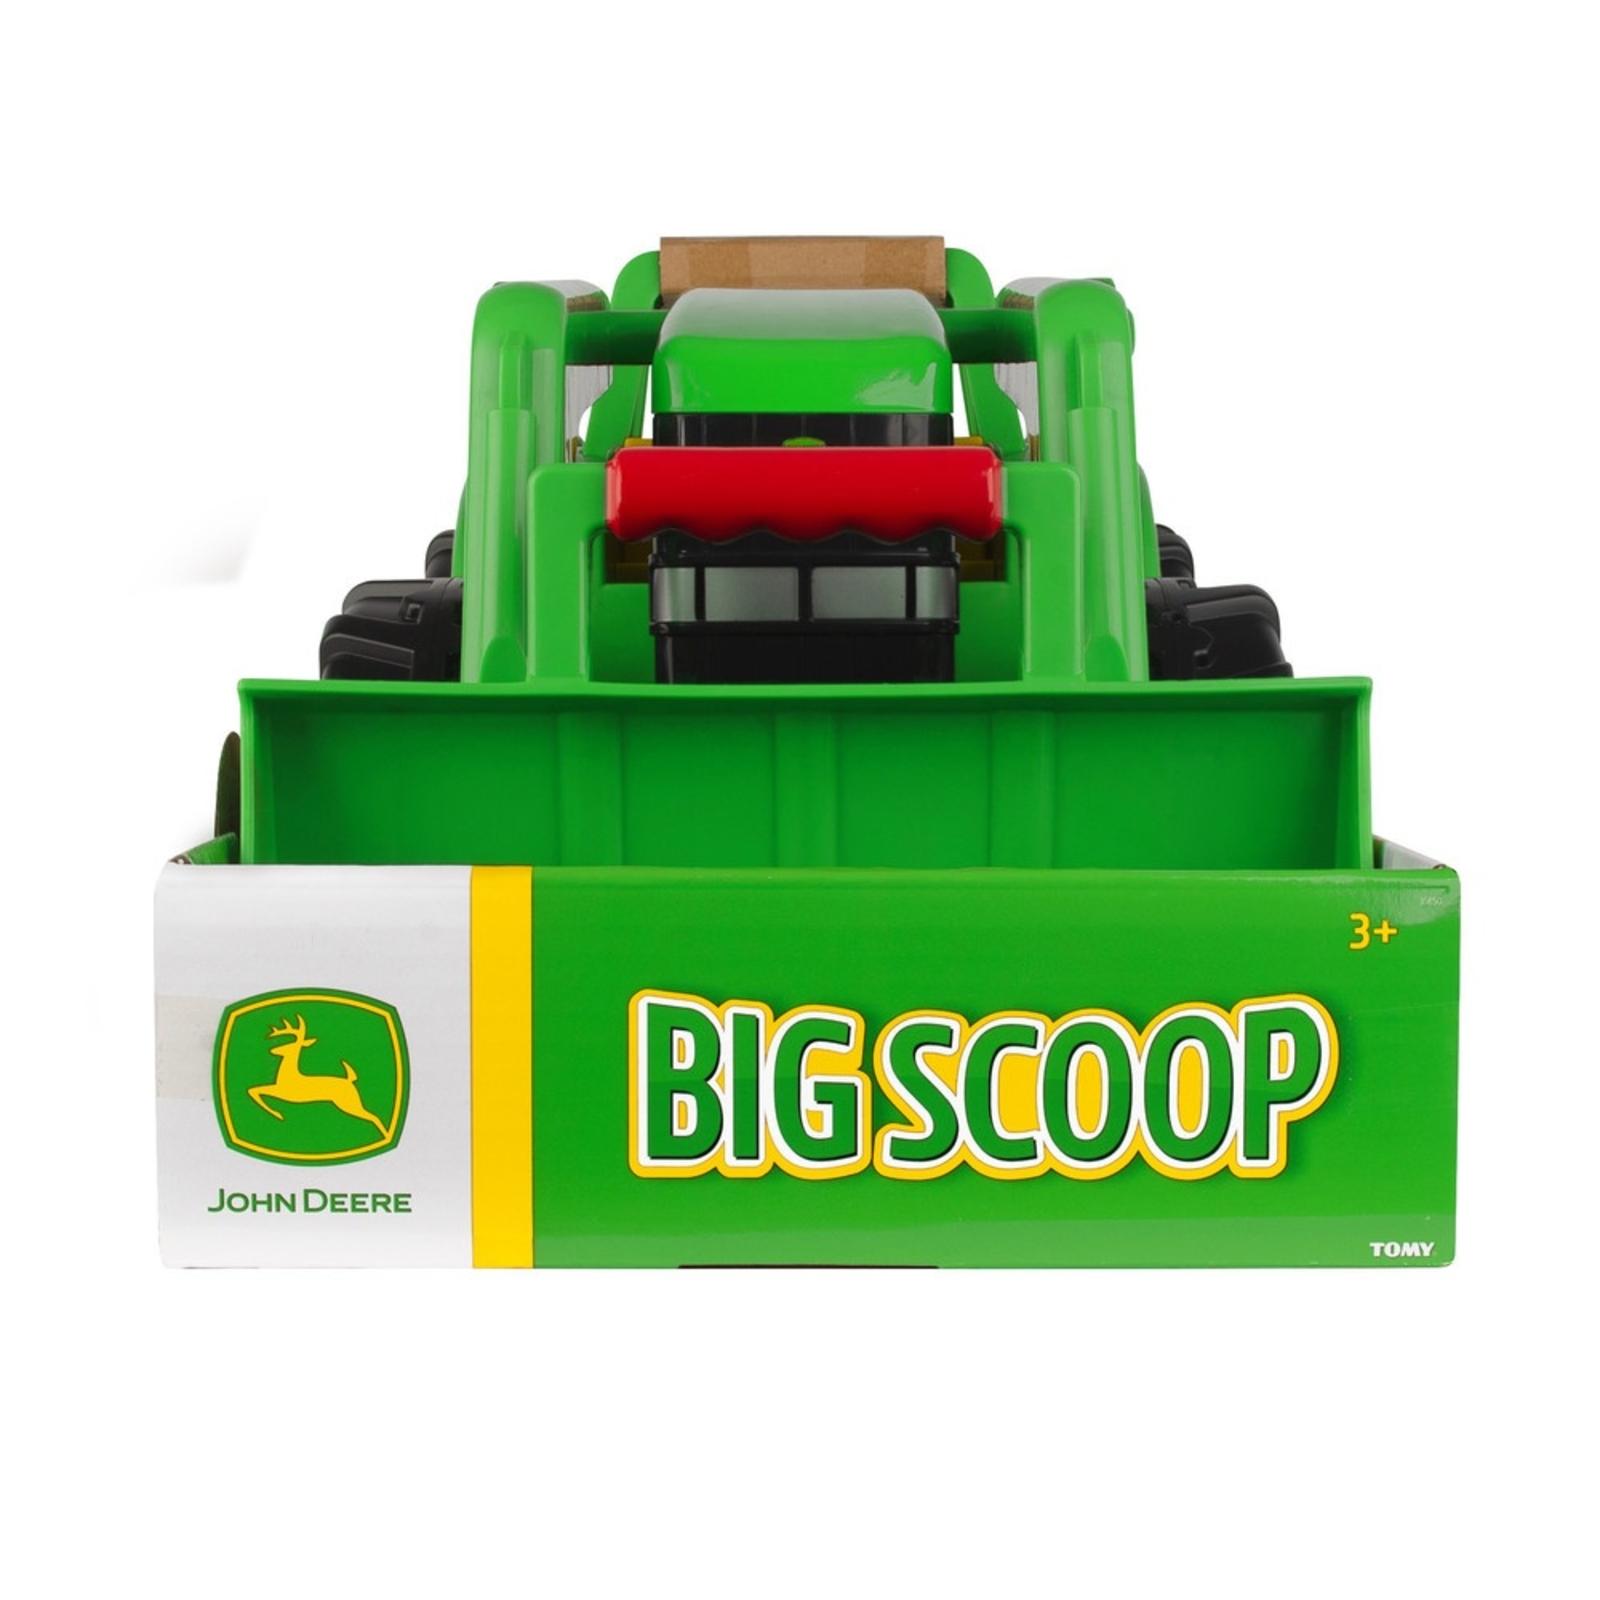 John Deere 21 Inch Big Scoop Tractor Toy with Loader - Sandbox Toy